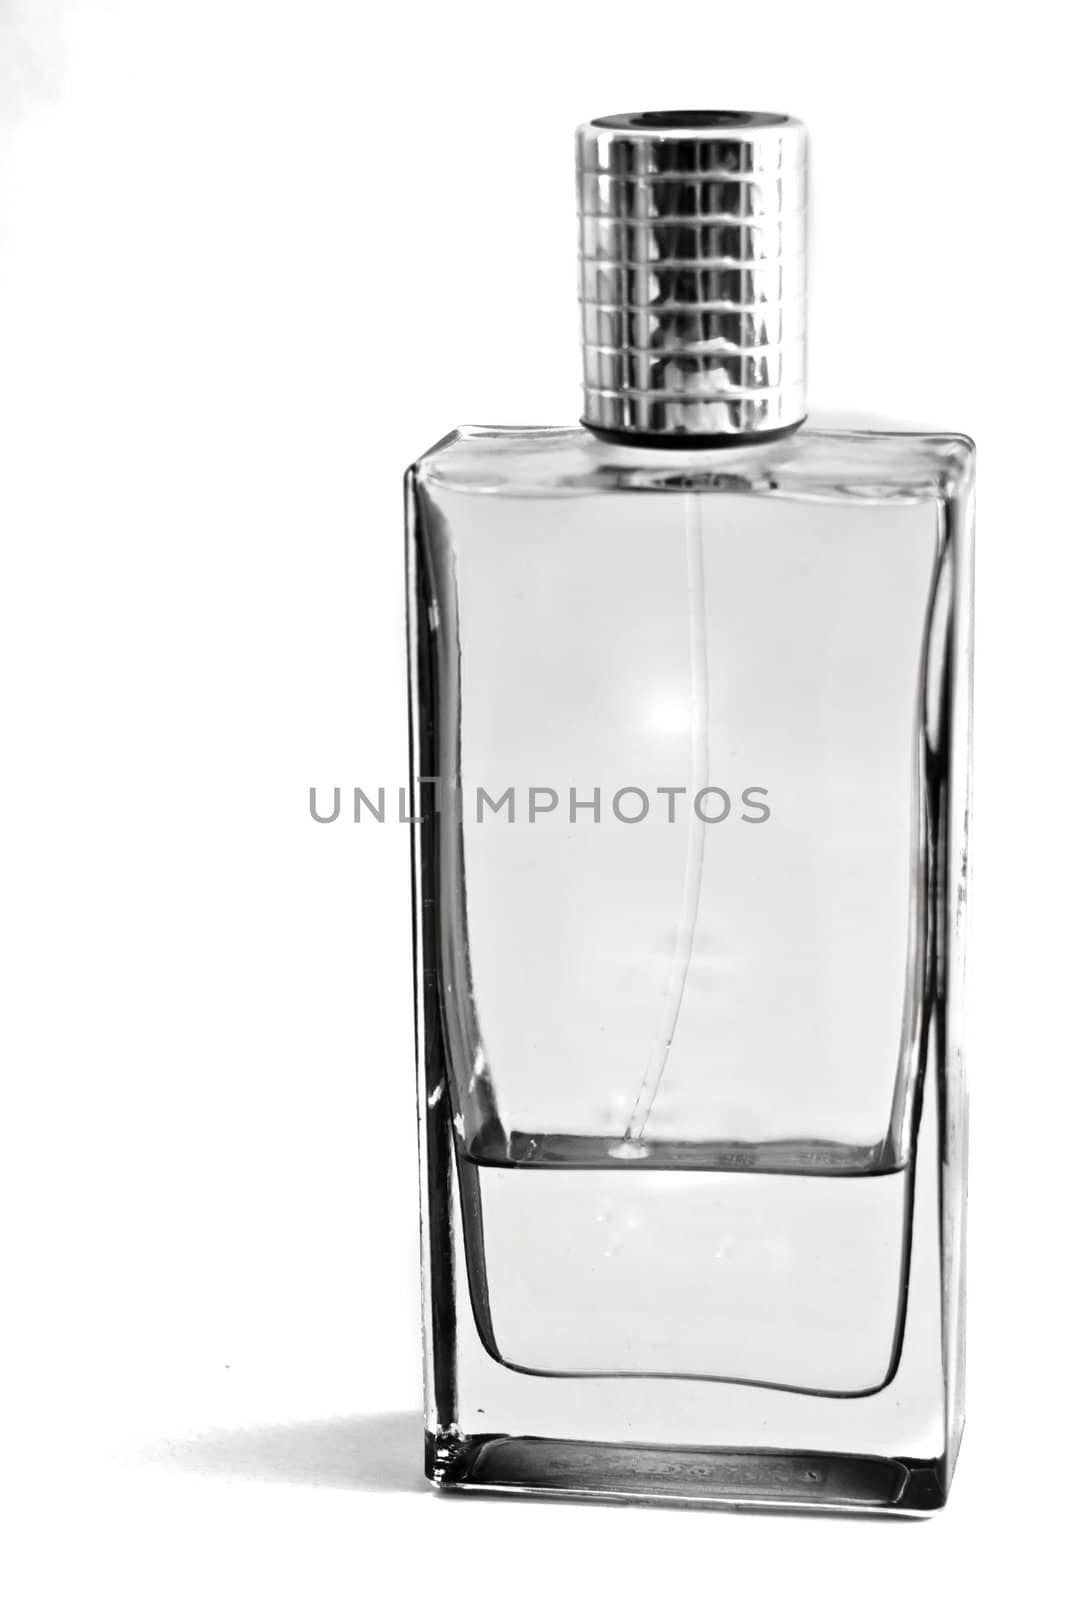 parfume in beautiful bottle by gandolfocannatella